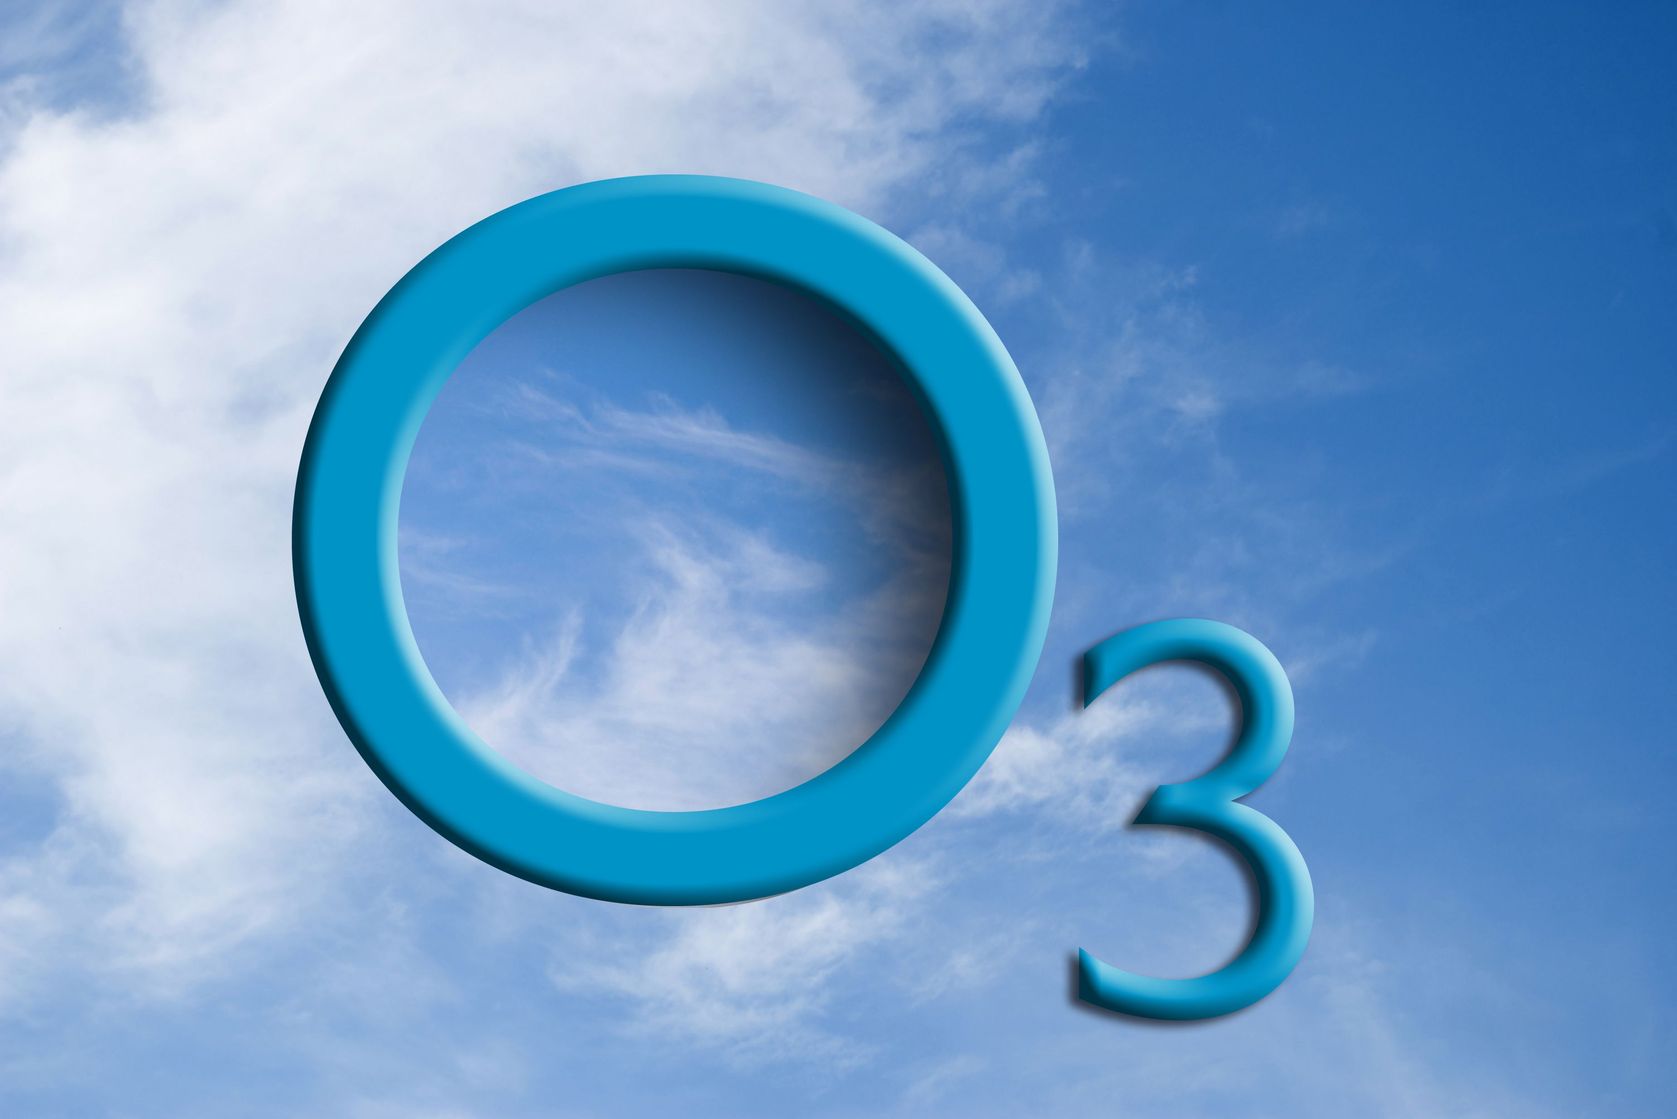 4616917 - ozone logo on the skyozone logo on the sky with reflection